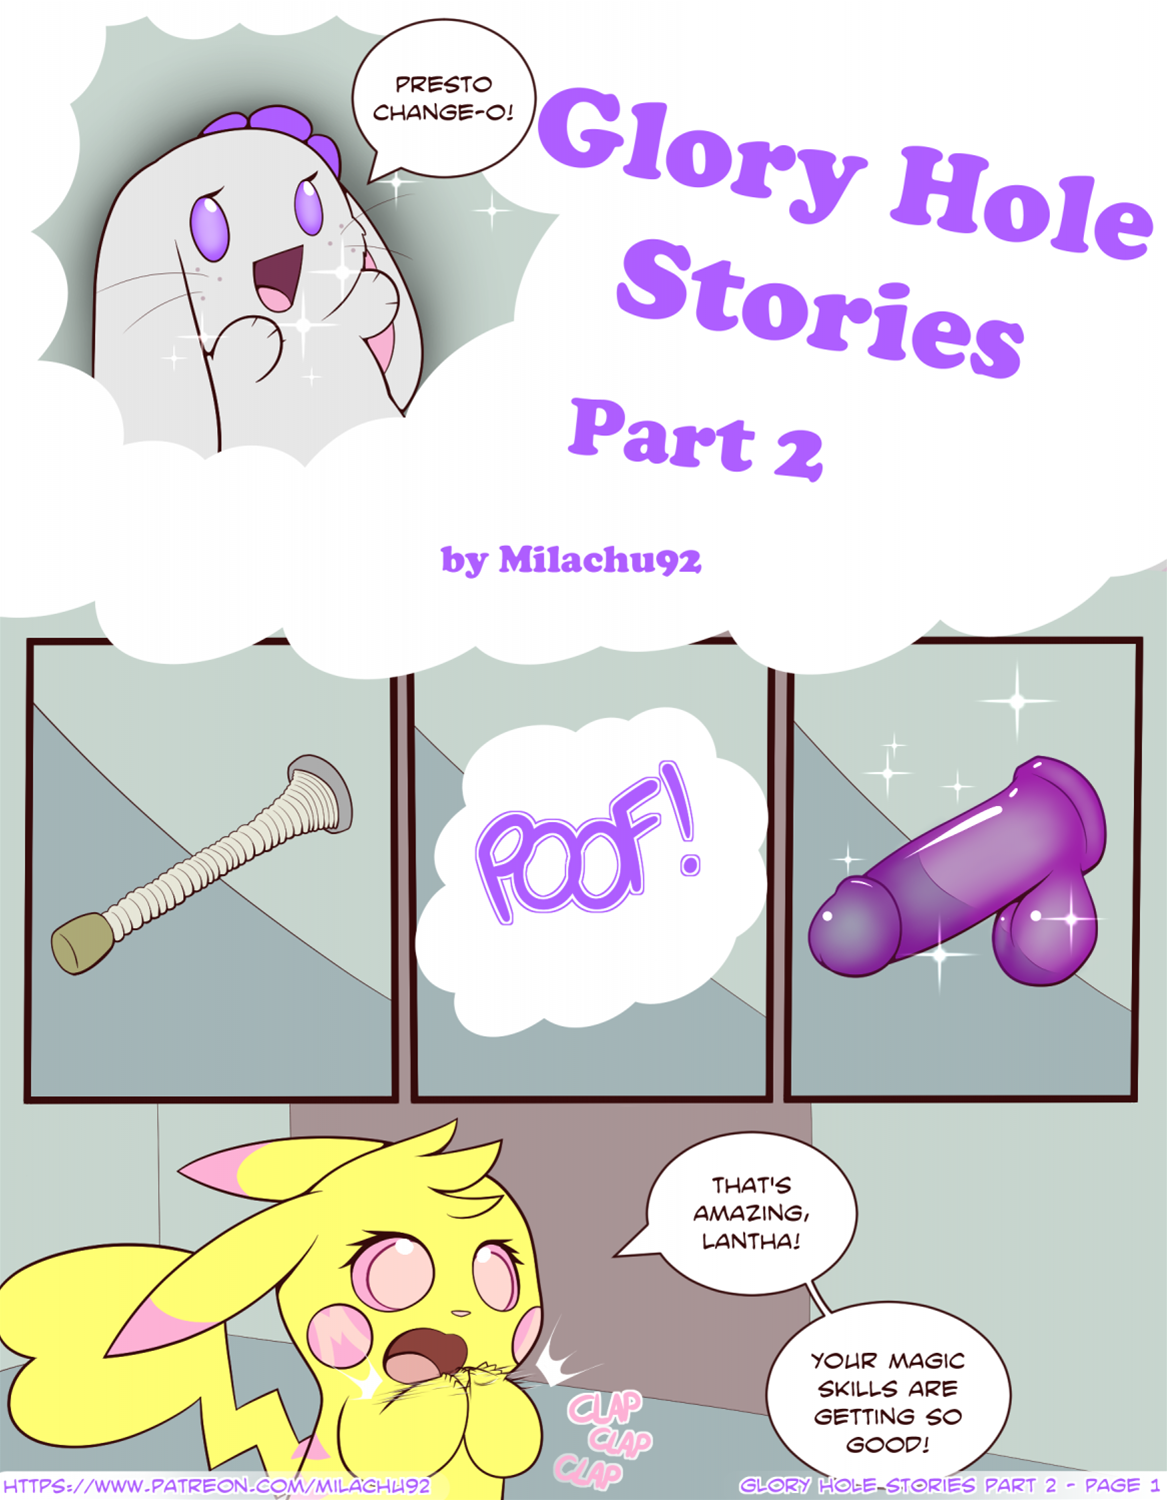 Glory hole stories